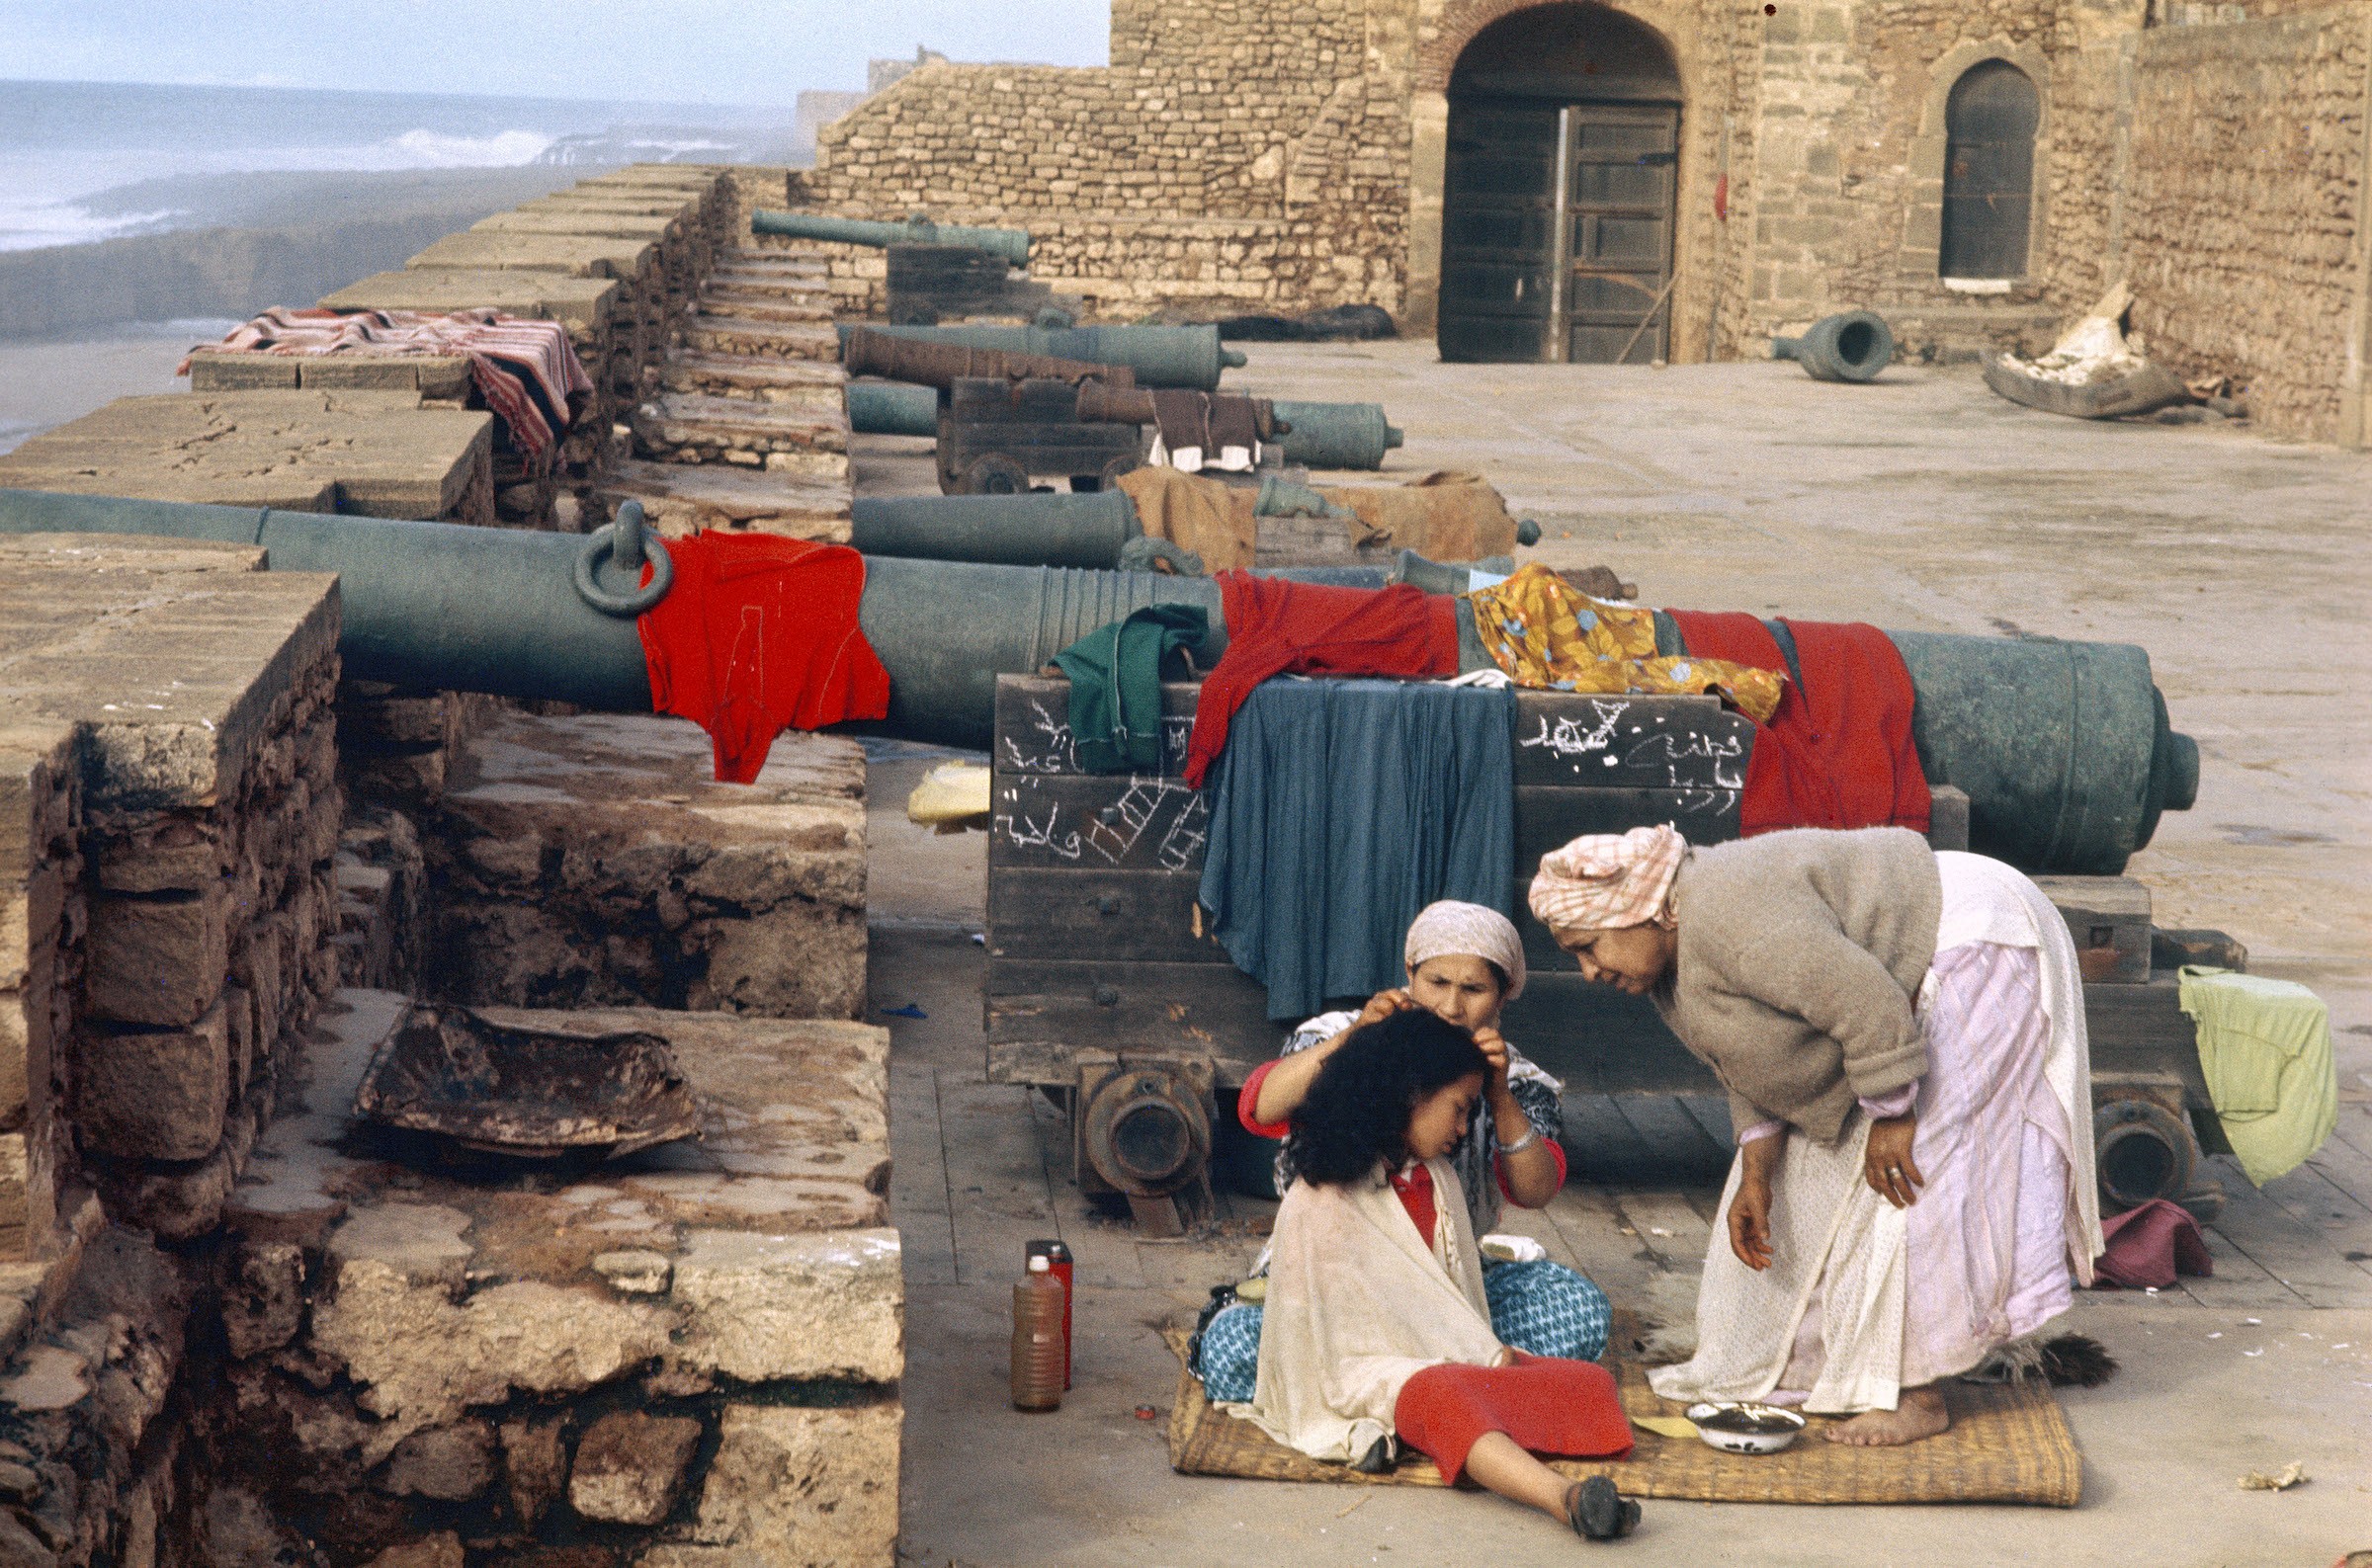 Старый обитаемый форт, Марокко, 1972. Фотограф Бруно Барби